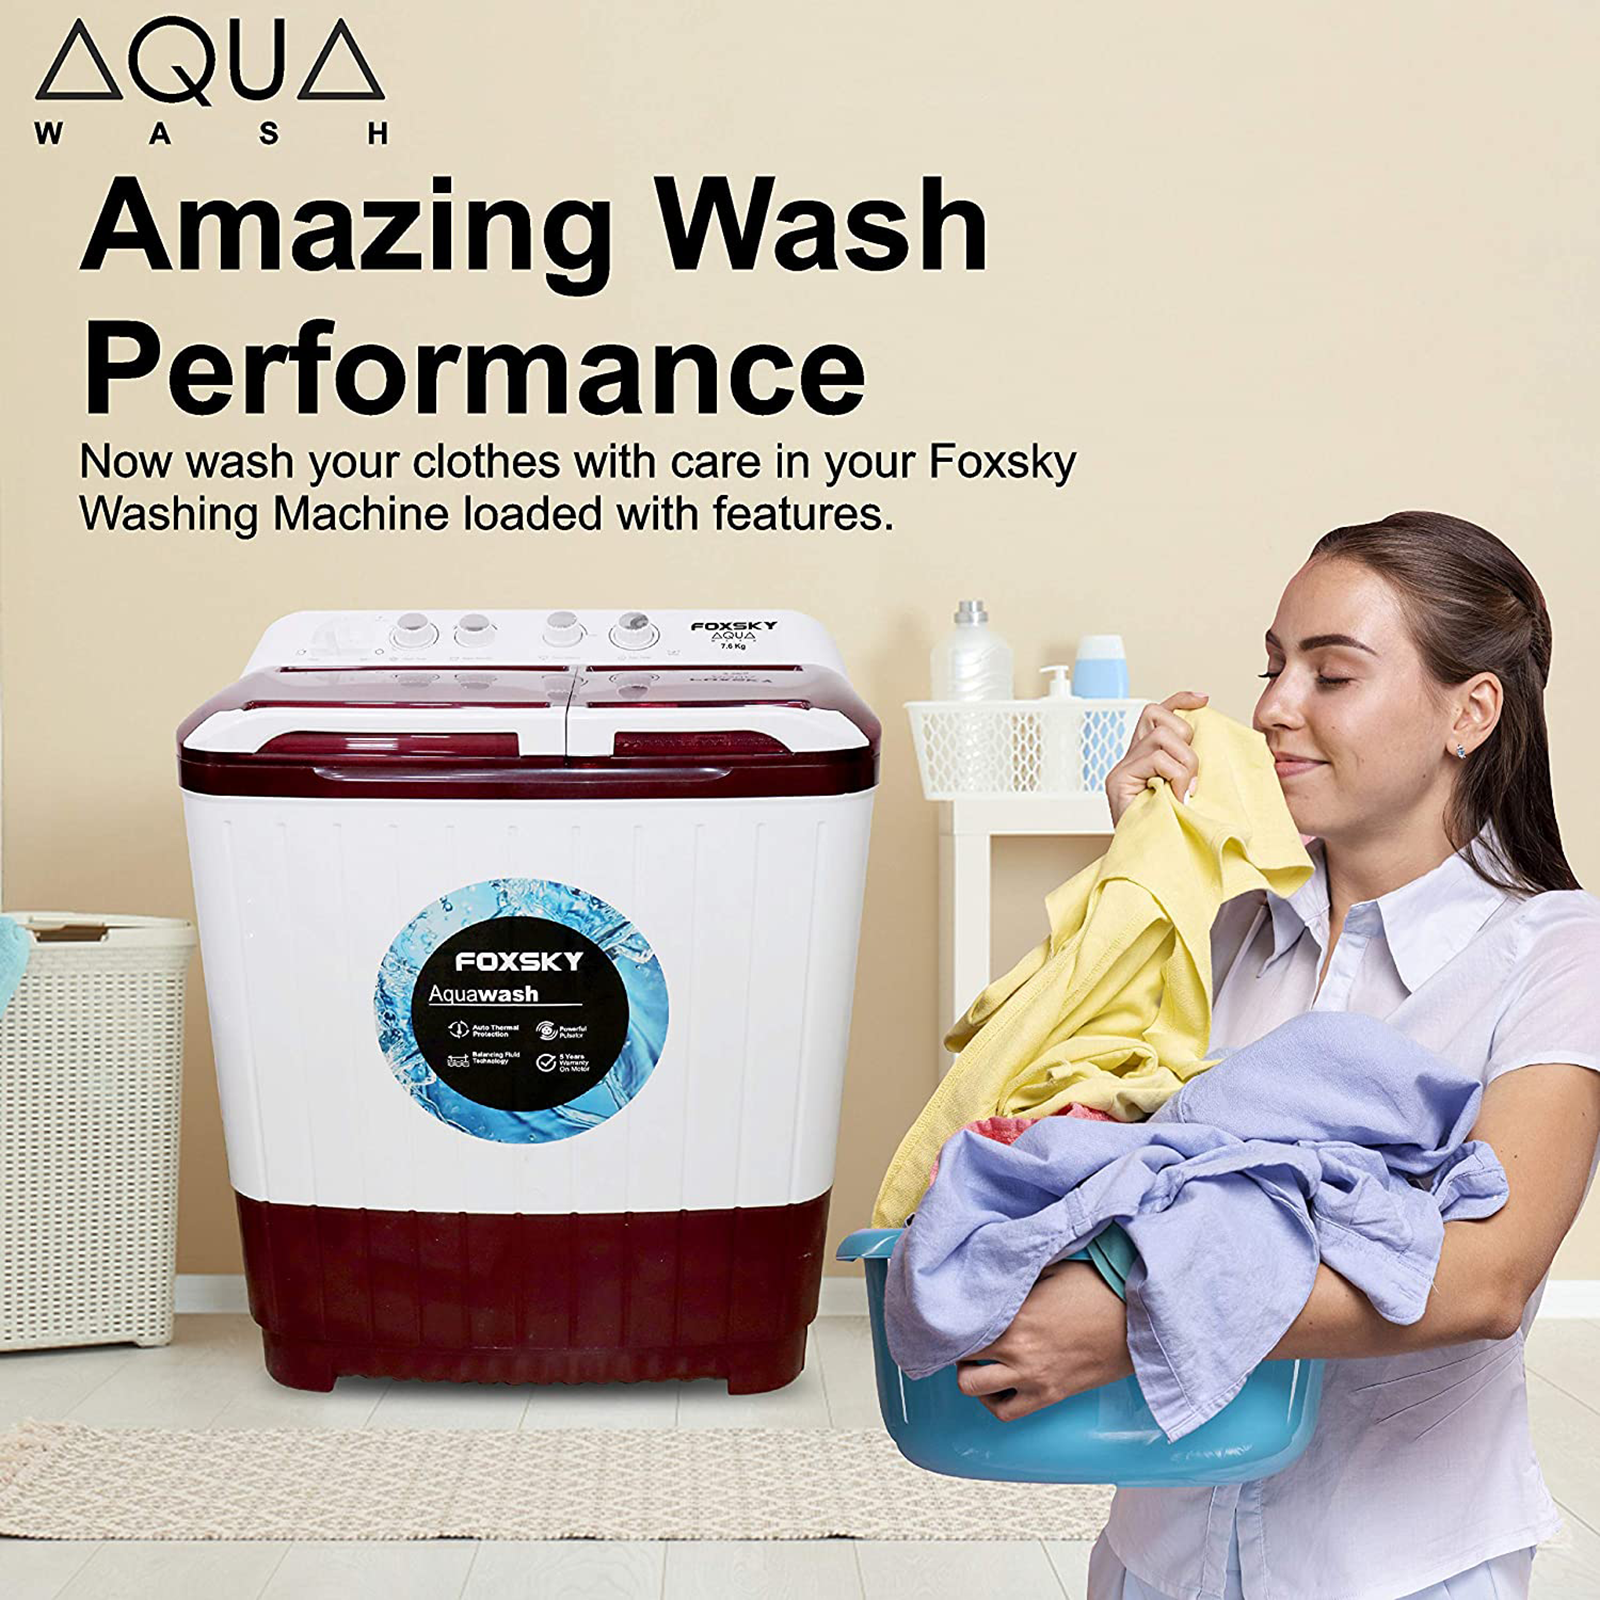 Foxsky 7.6 Kg 5 Star Semi Automatic Washing Machine with 3D Scrub Technology (Aqua Wash, Maroon)_3